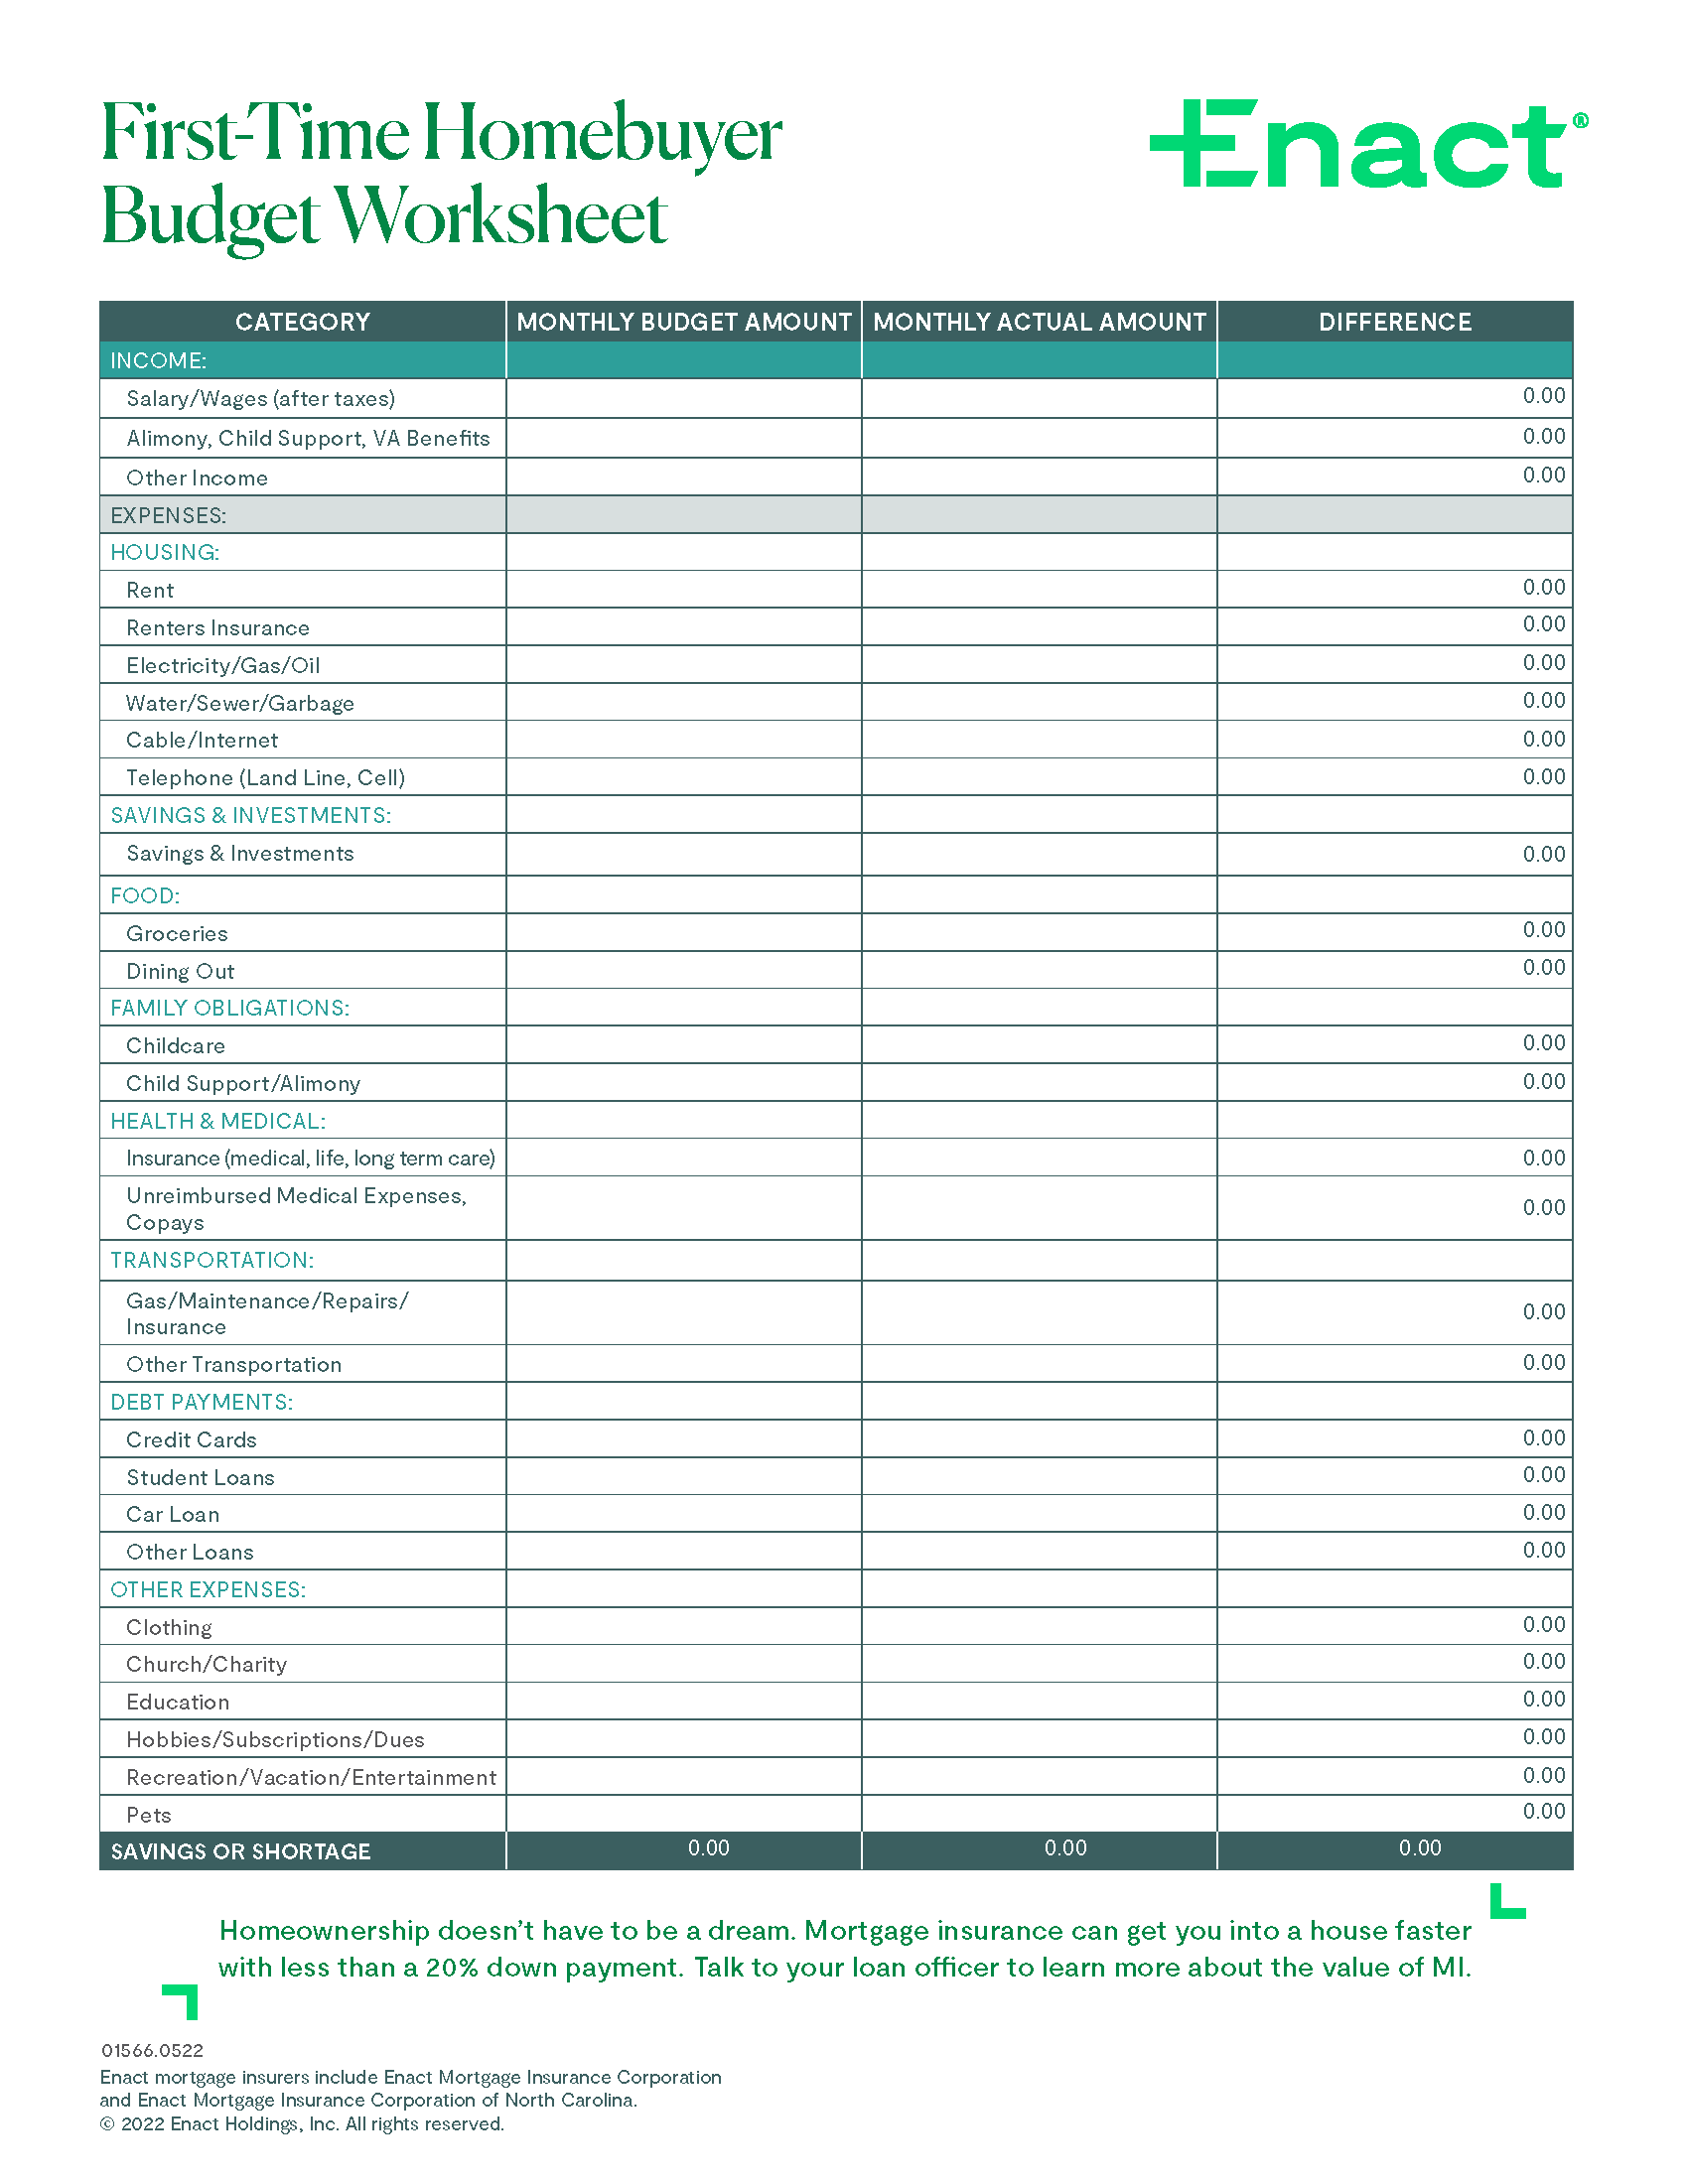 Enact's First-Time Homebuyer Budget Worksheet